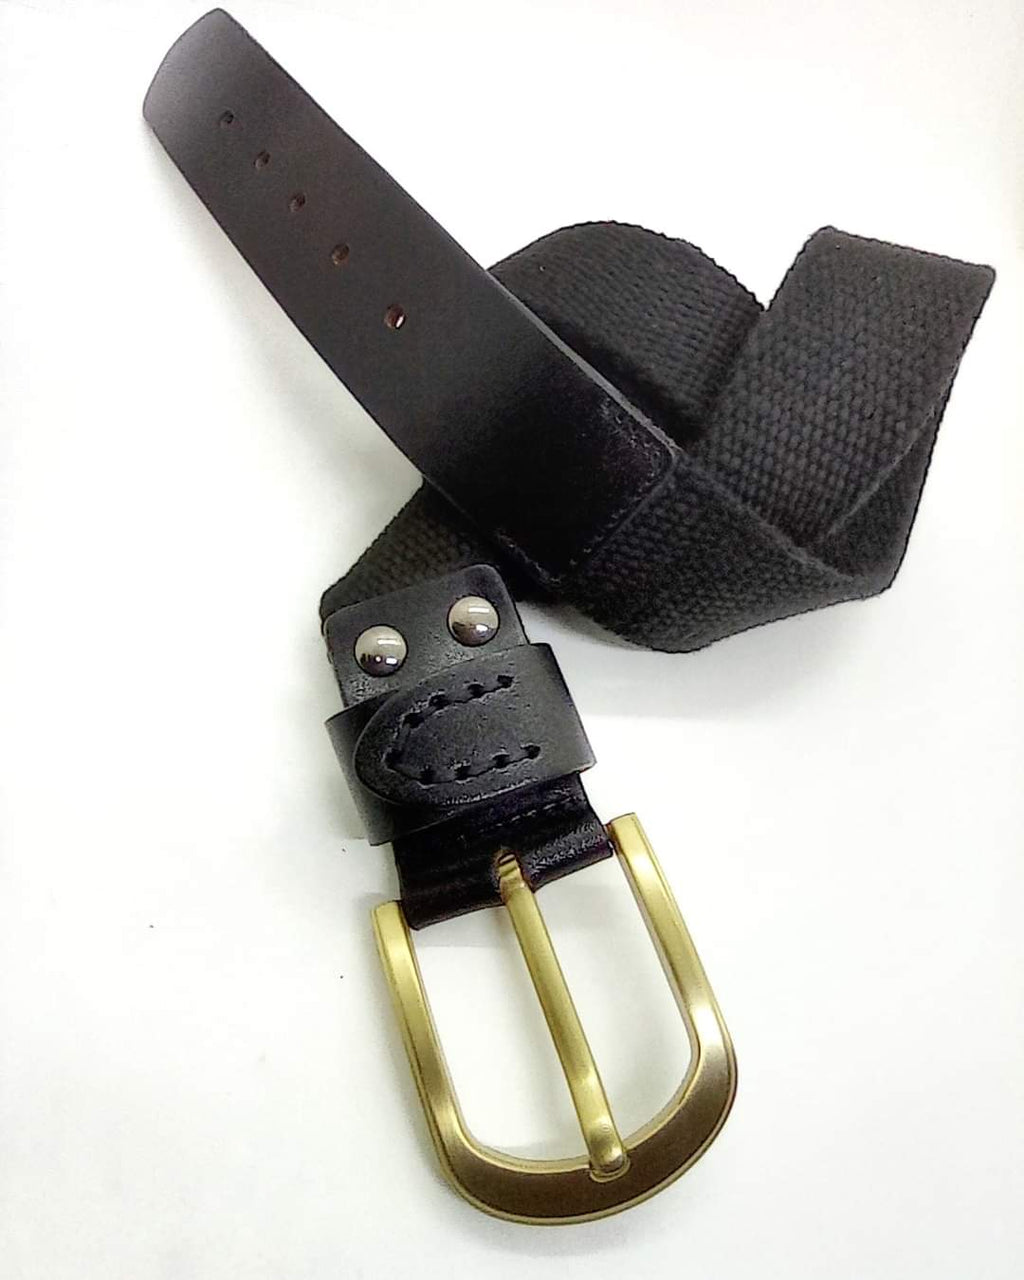 HOMME Raw™ Casual Leather Belt Black - handsandhead